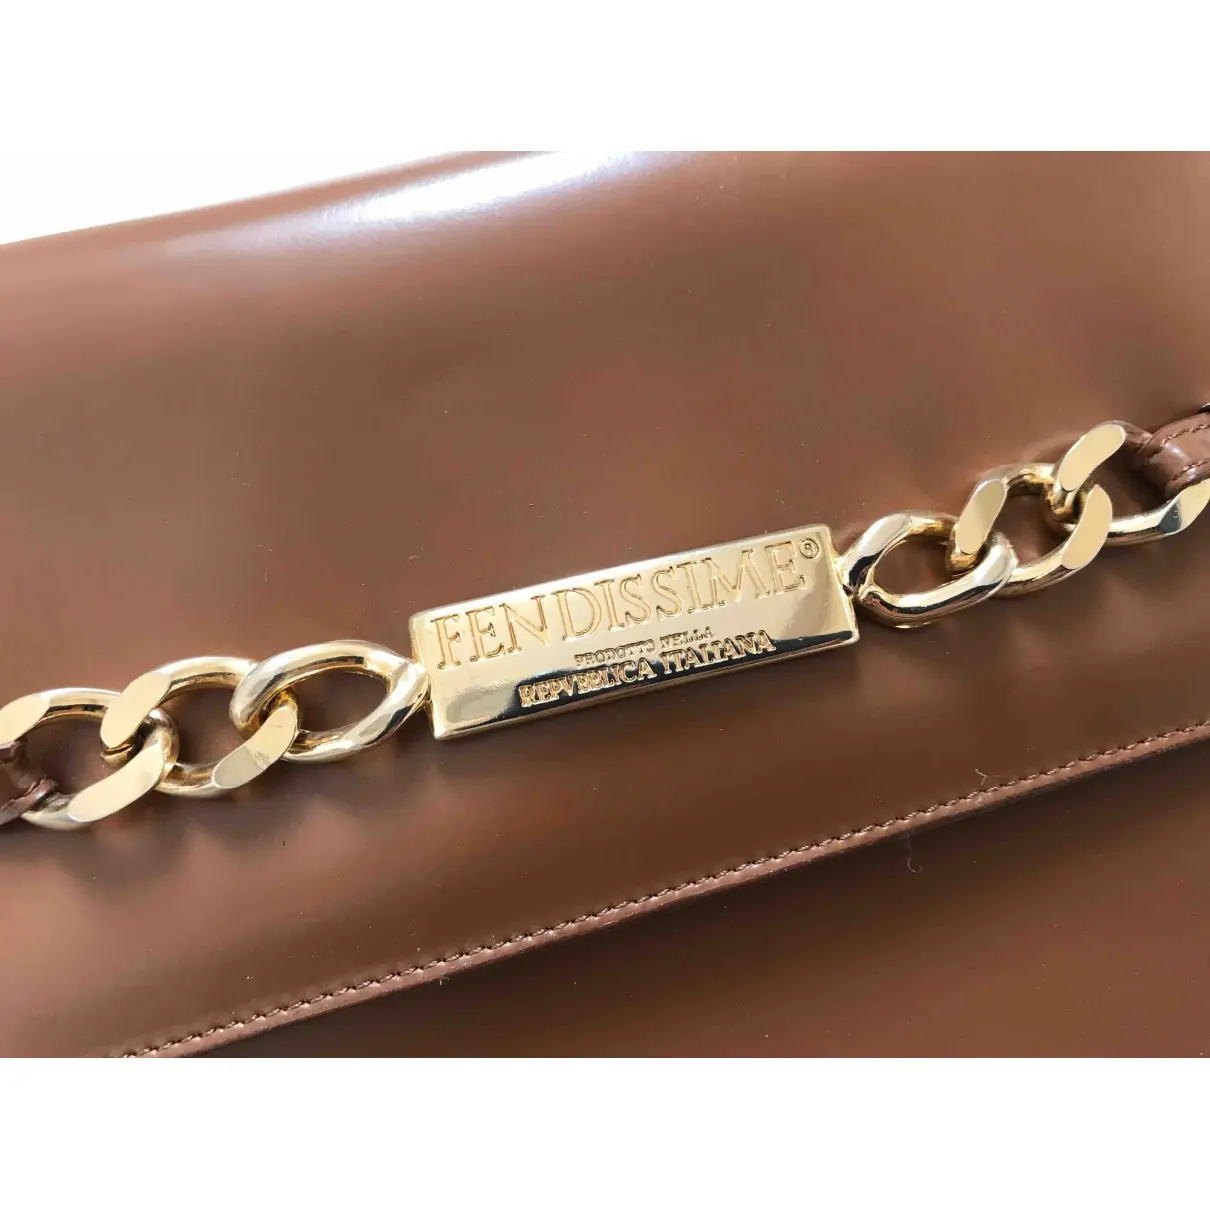 Buy Fendissime Leather crossbody bag online